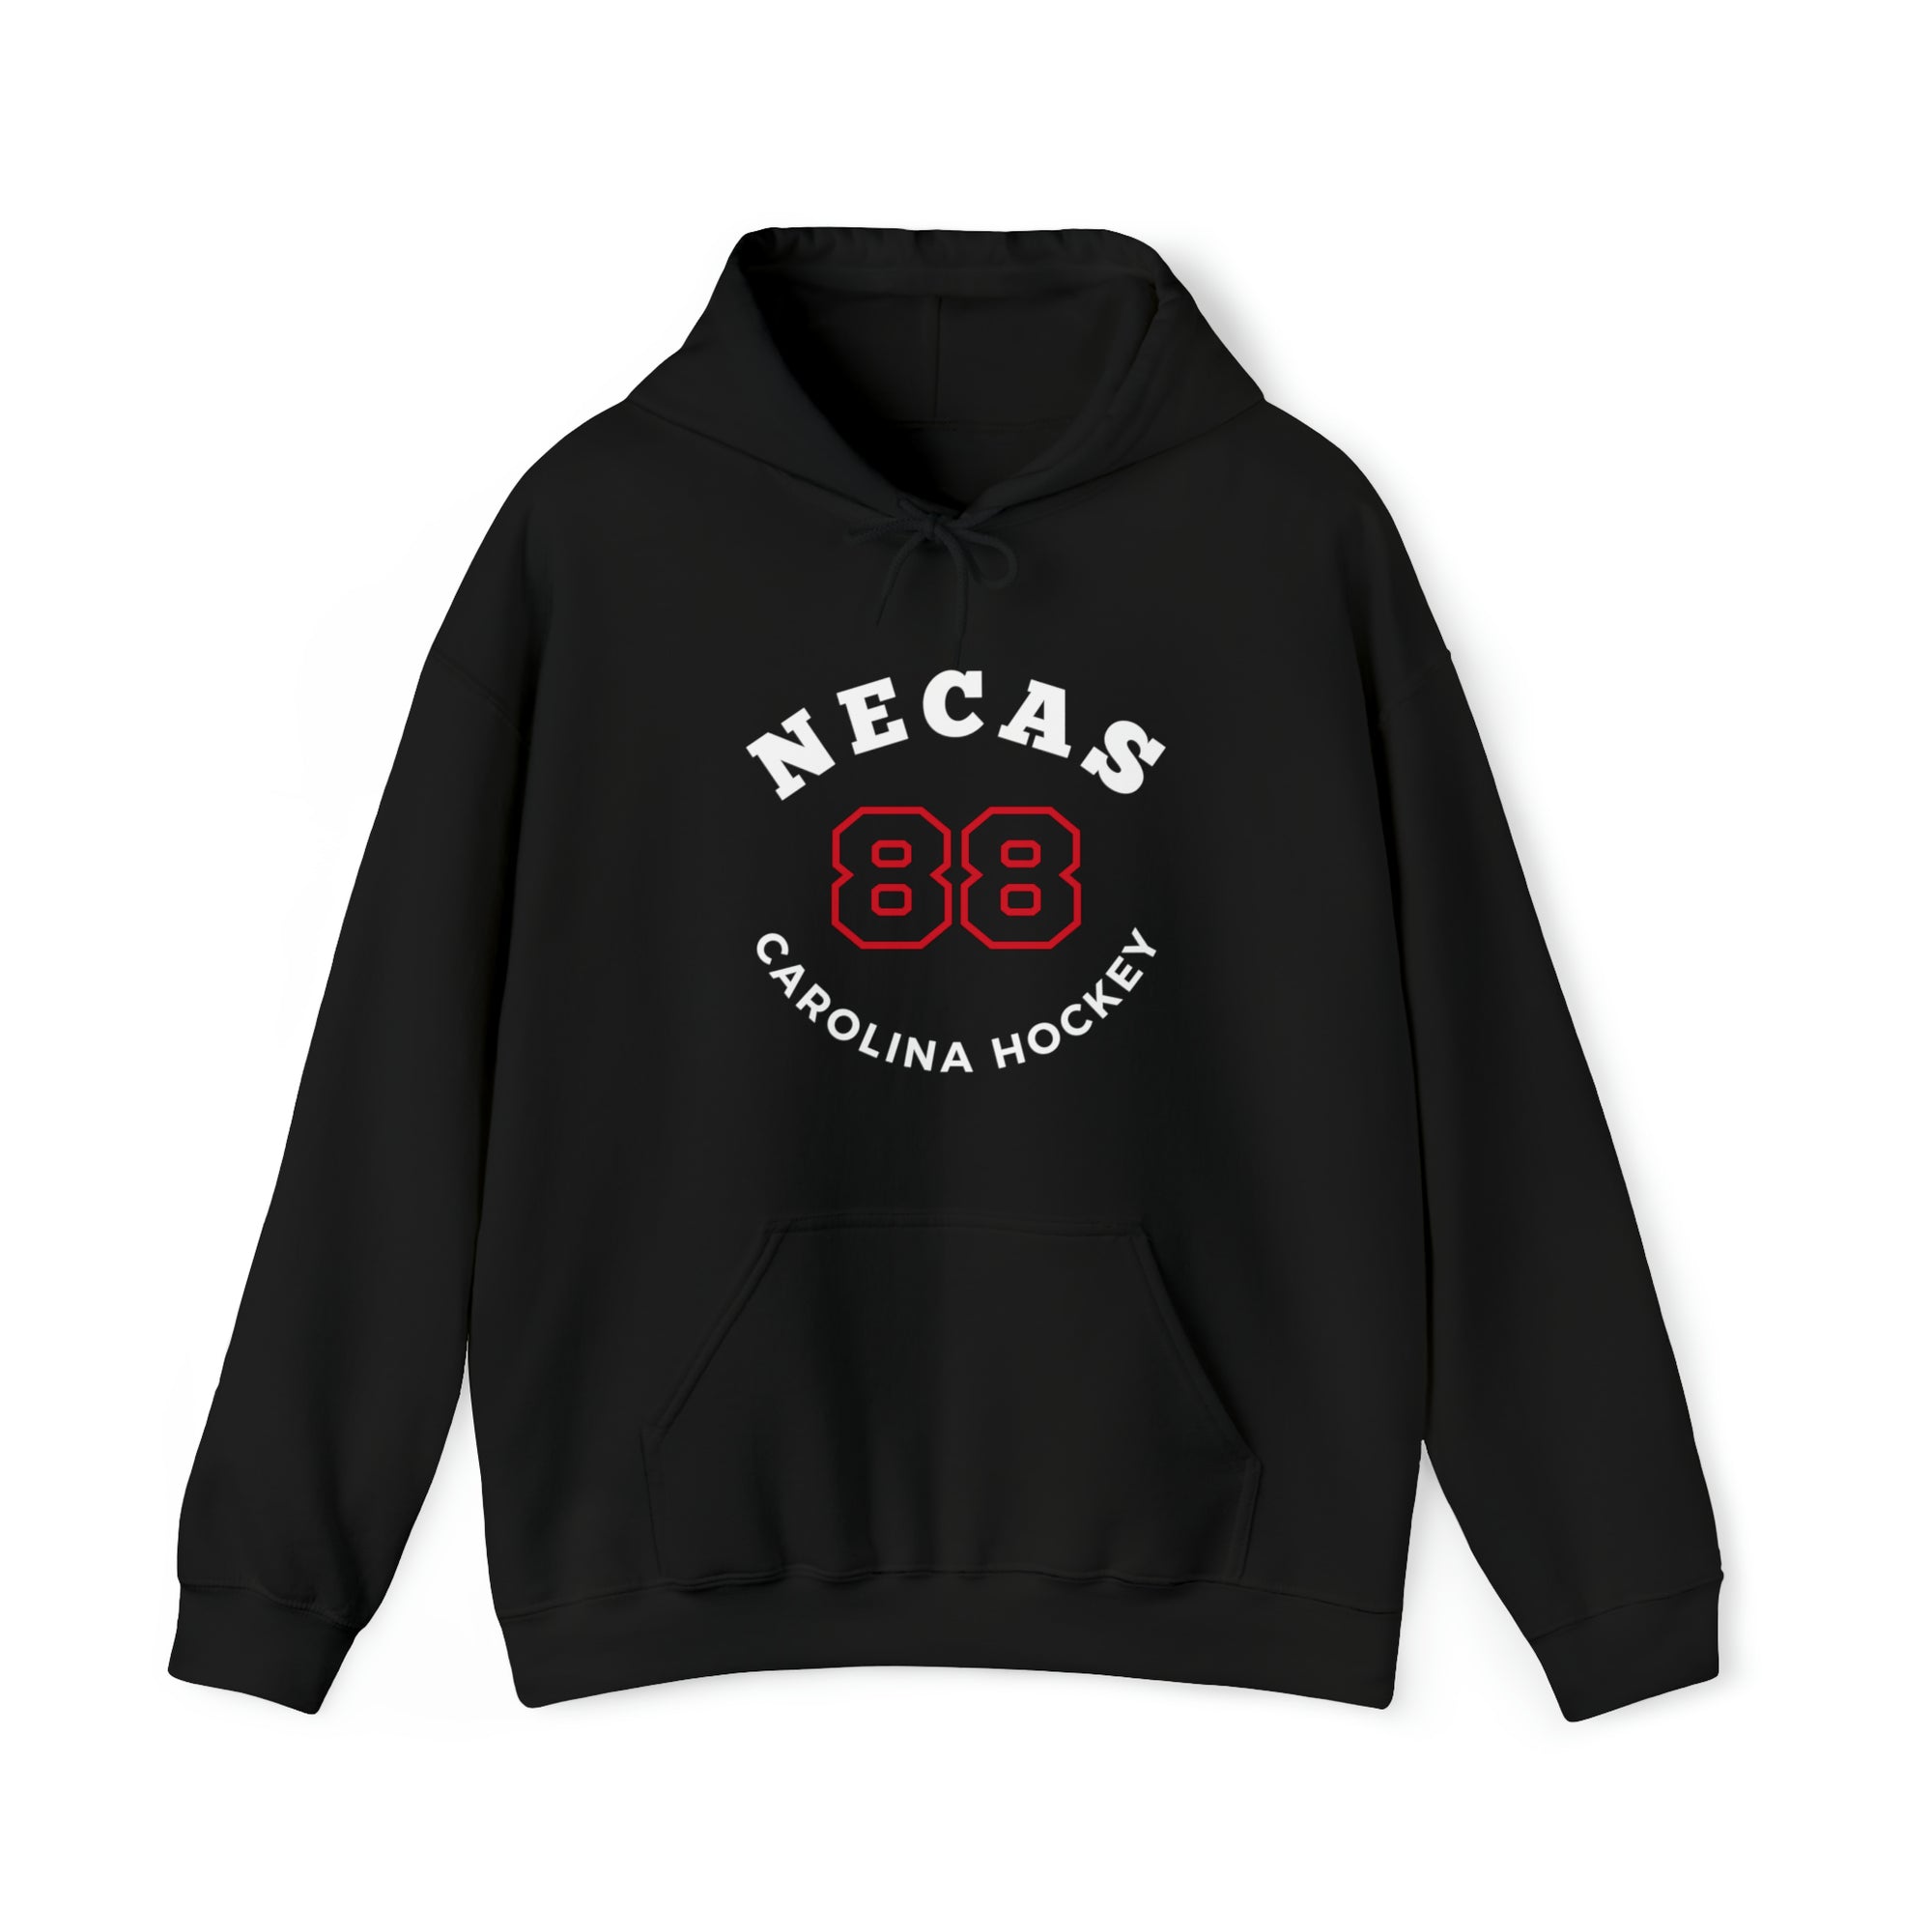 Necas 88 Carolina Hockey Number Arch Design Unisex Hooded Sweatshirt